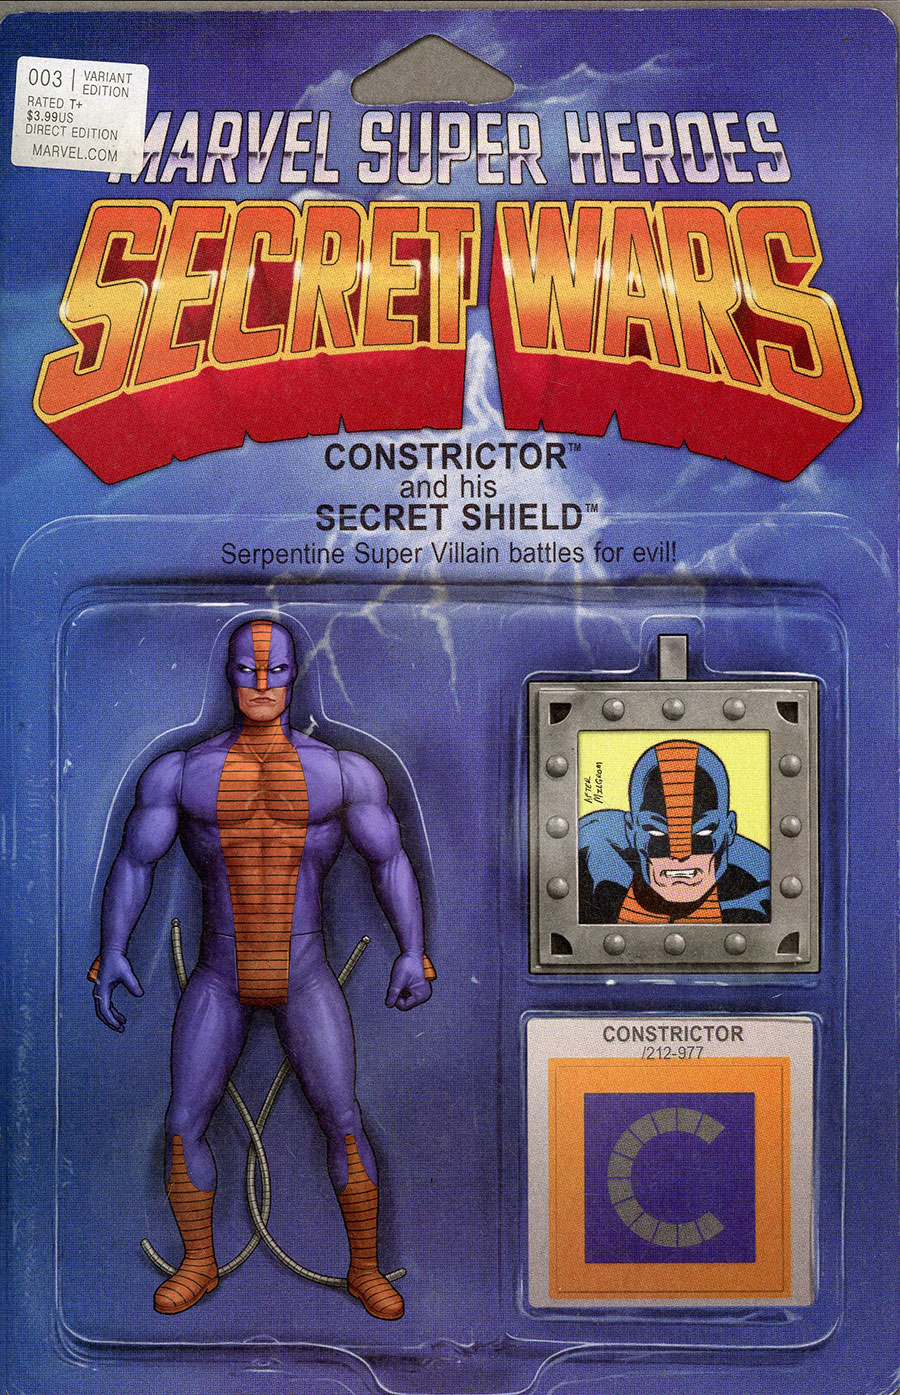 Marvel Super Heroes Secret Wars Battleworld #3 Cover D Variant John Tyler Christopher Action Figure Cover